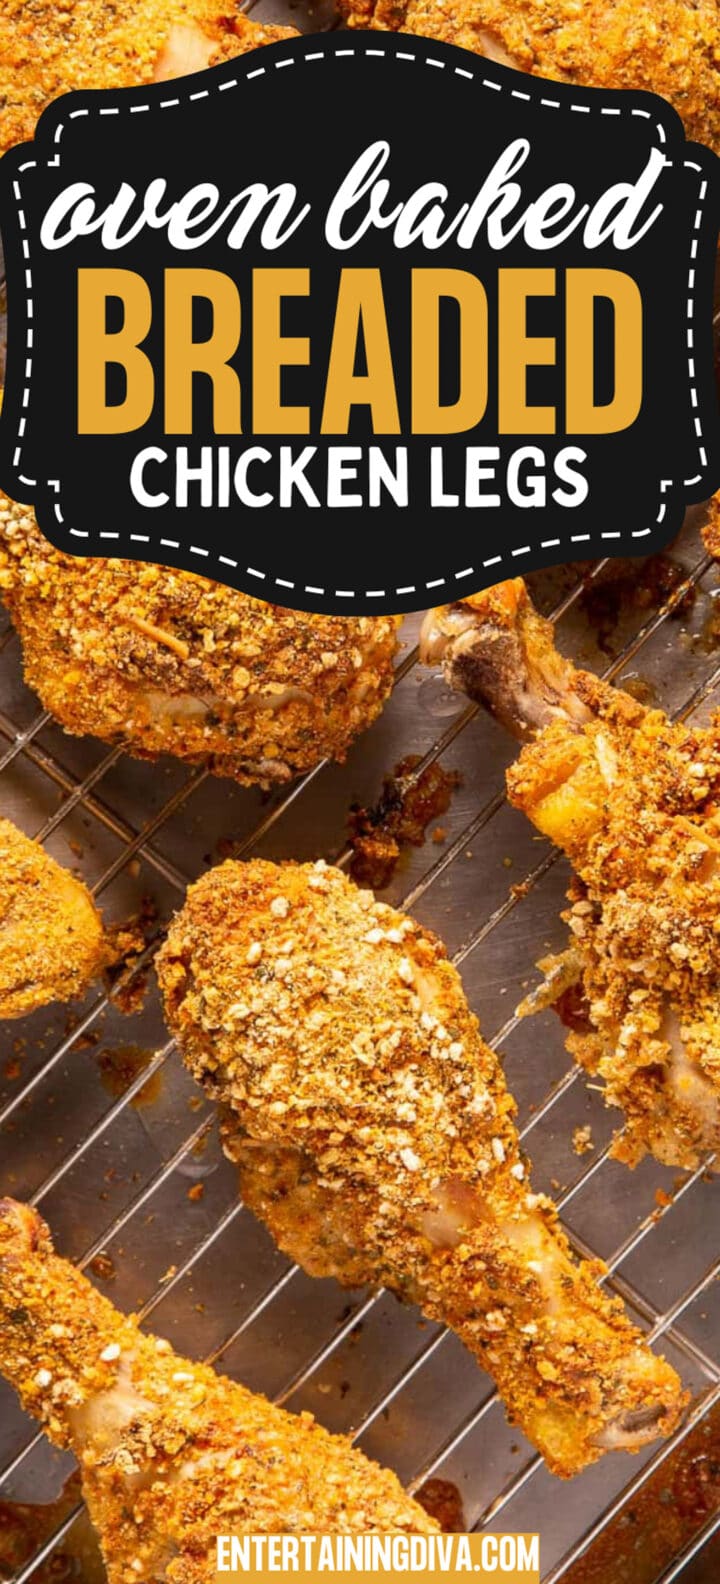 The Best Oven Baked Breaded Chicken Legs